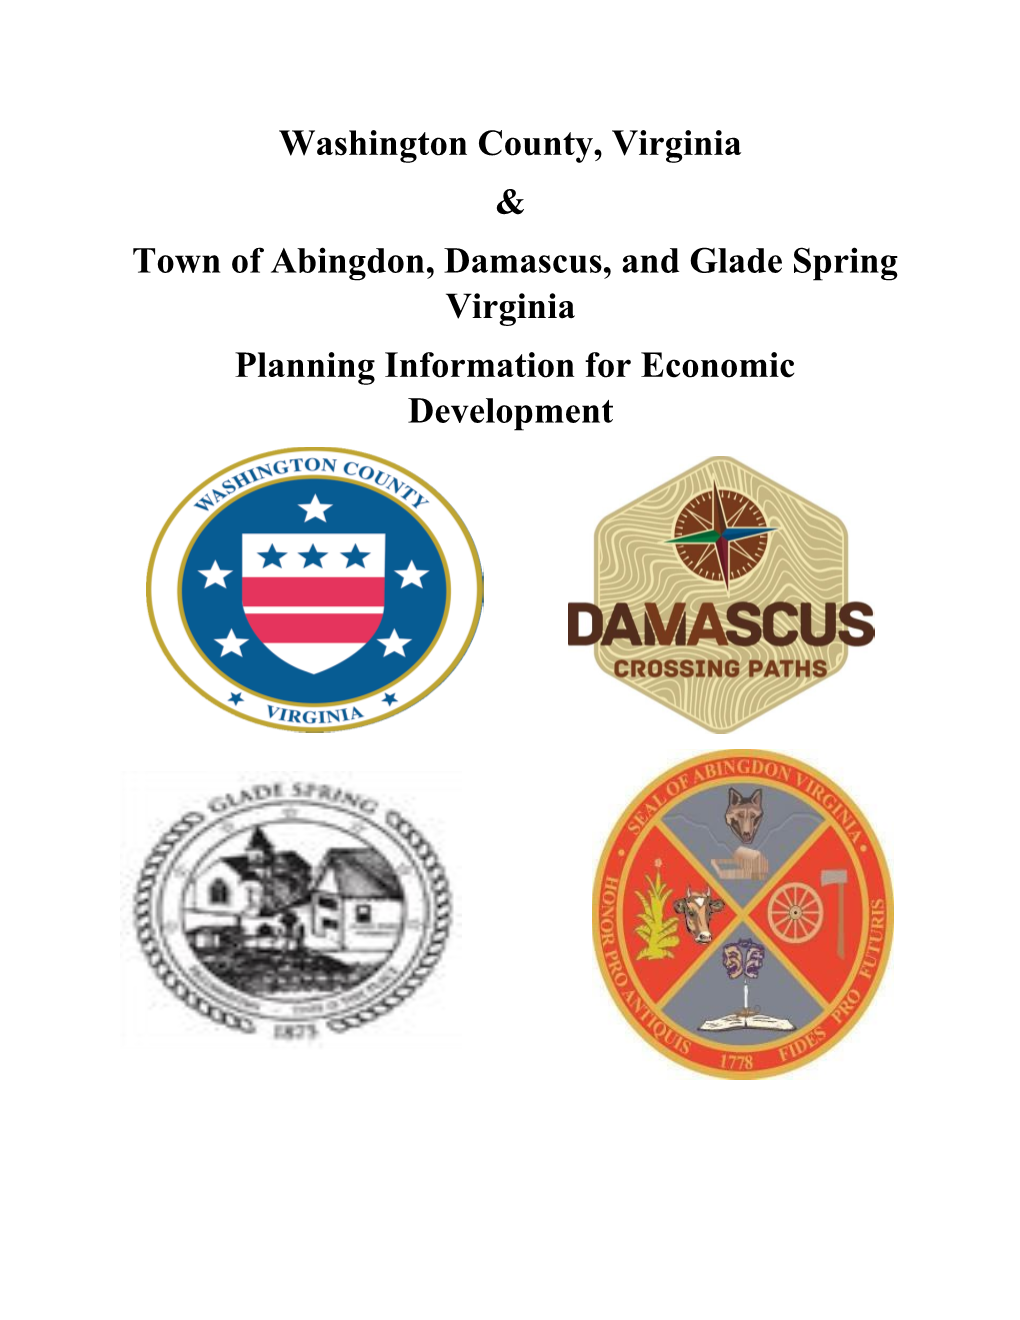 Washington County, Virginia & Town of Abingdon, Damascus, and Glade